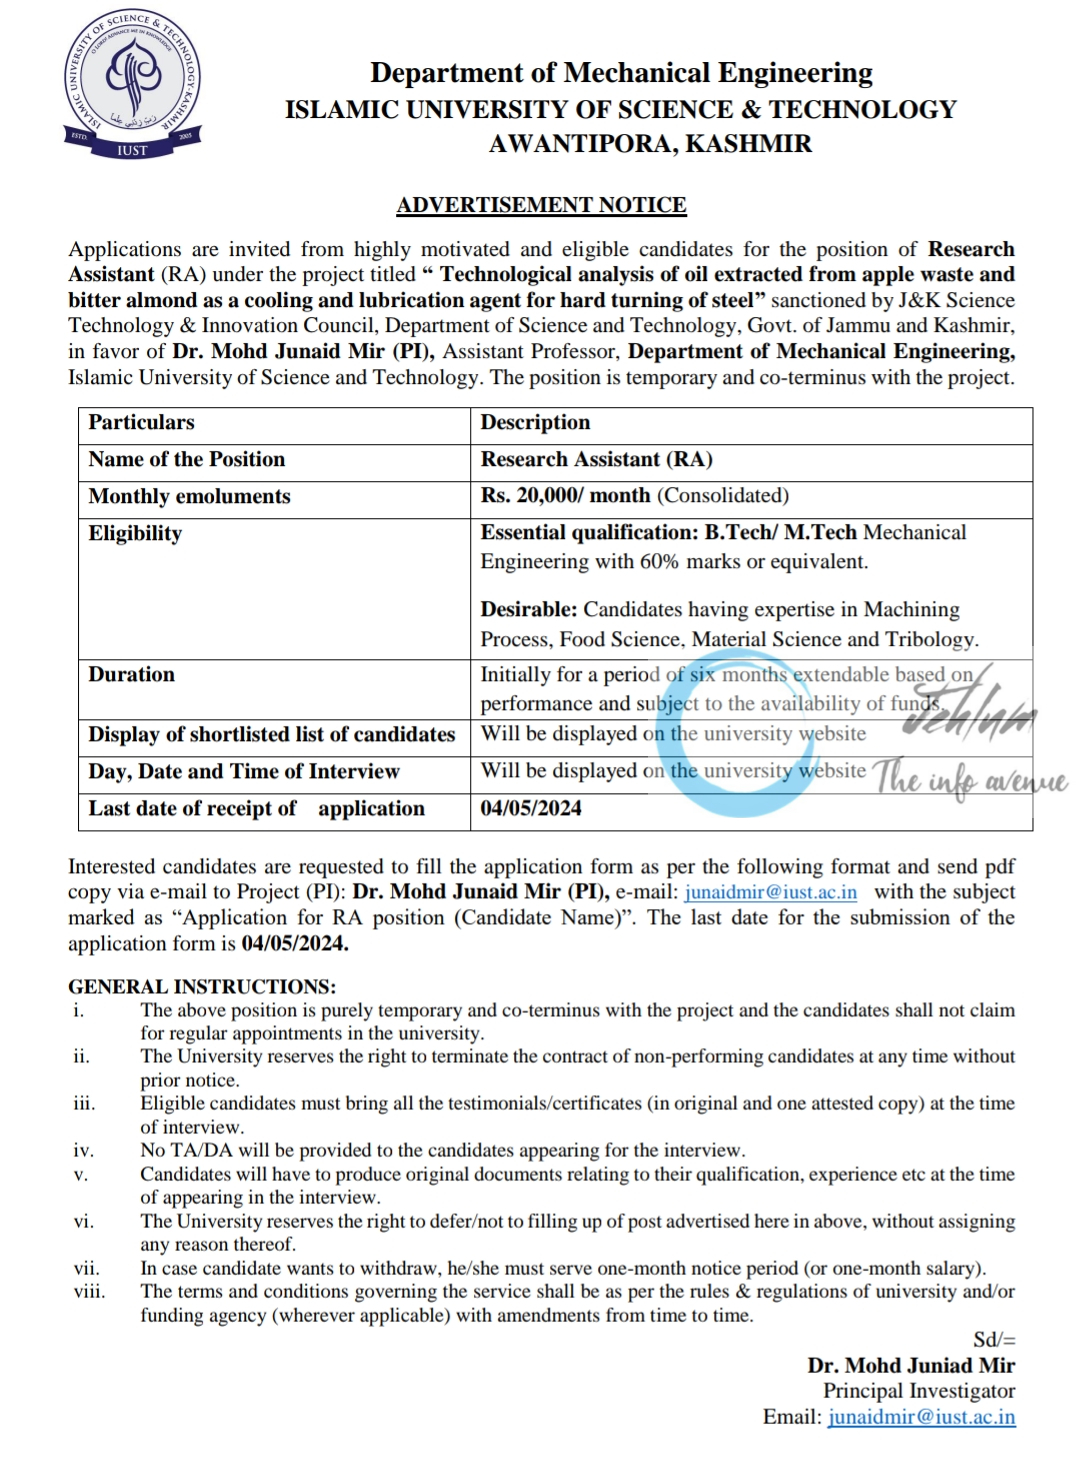 IUST Kashmir Deptt of Mechanical Engineering Advertisement Notice 2024